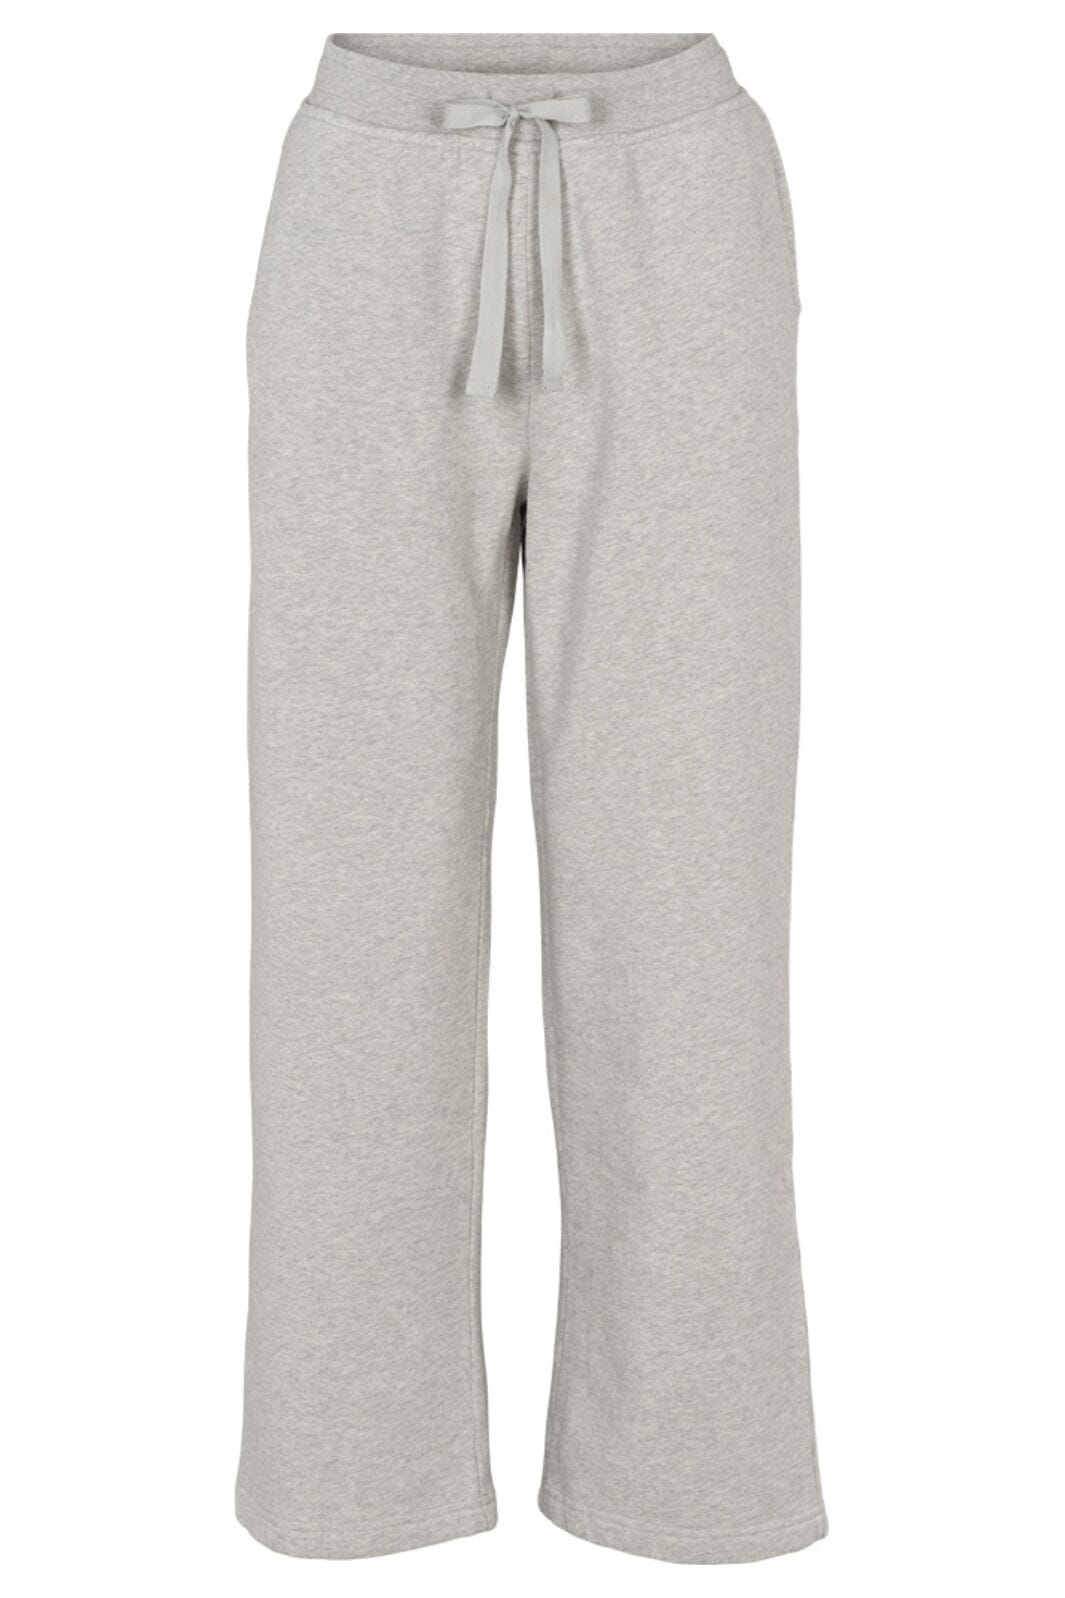 Basic Apparel - Cinna Pants - 025 Grey Mel. Sweatpants 